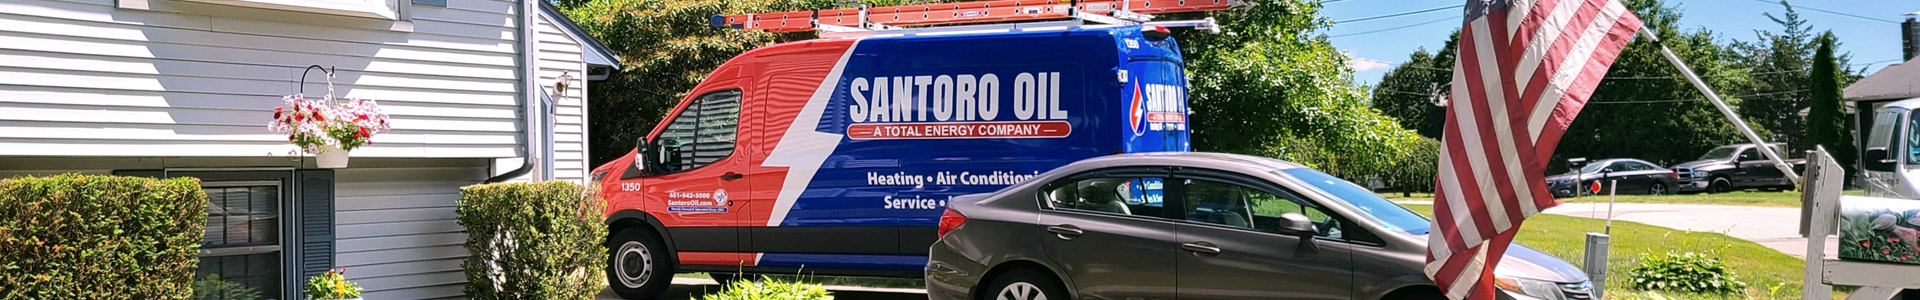 Santoro Oil service truck onsite at a home in RI or Southeastern MA